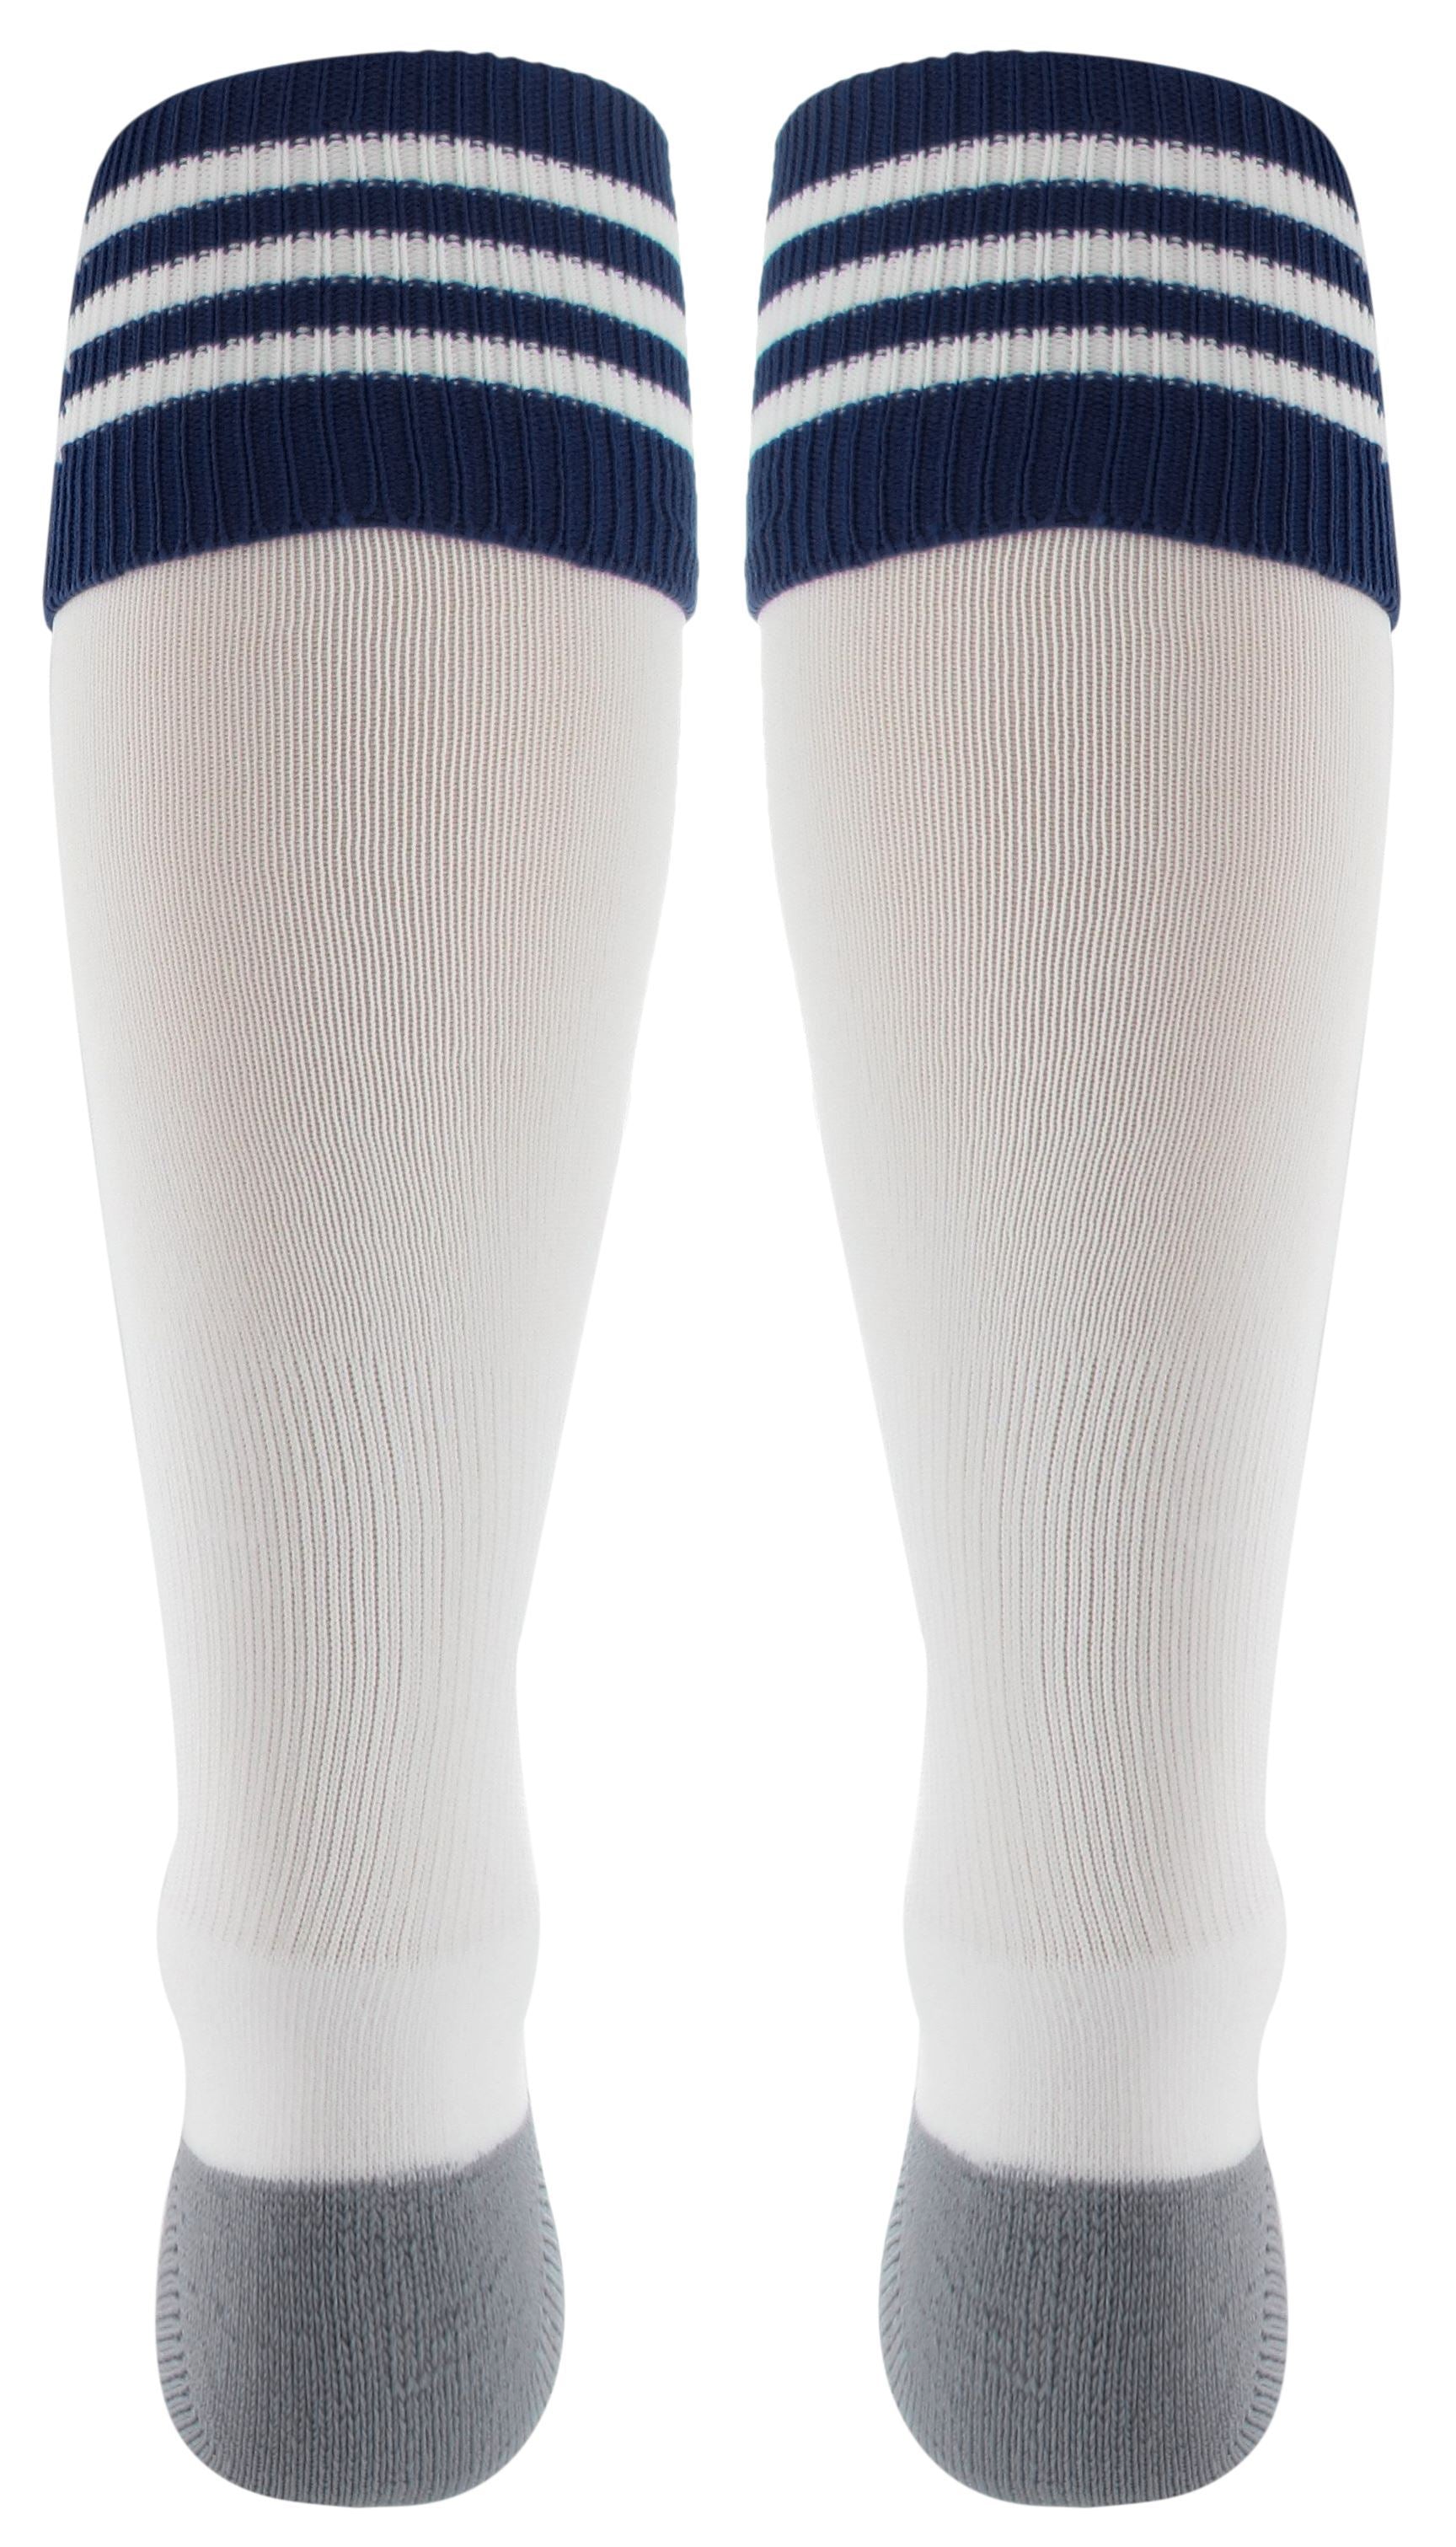 adidas Copa Zone Cushion II Soccer Sock (white/navy) Soccer Socks Adidas 